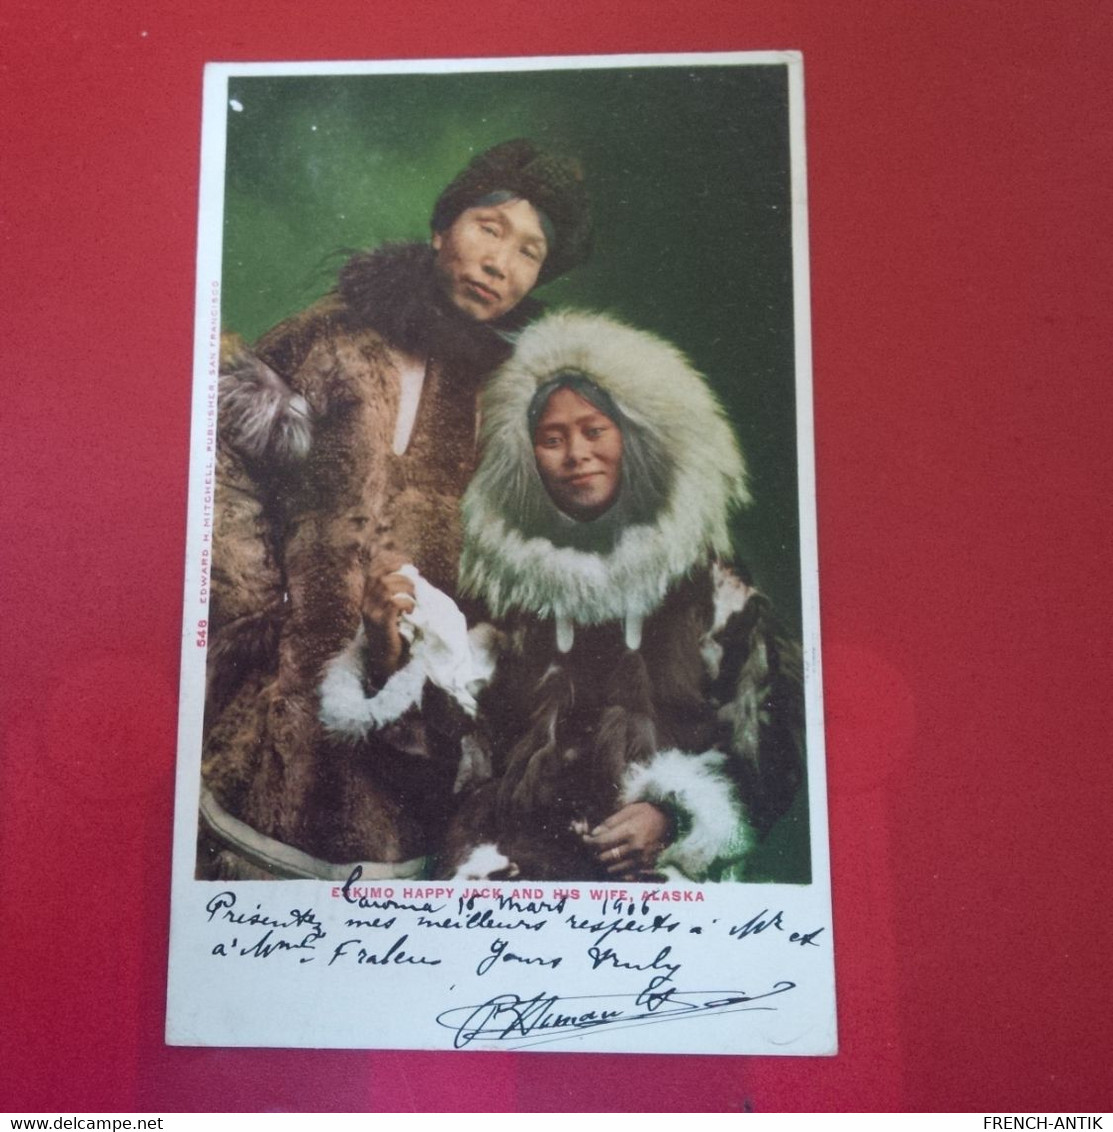 INDIEN ESKIMO HAPPY JACK AND HIS WIFE ALASKA - Native Americans